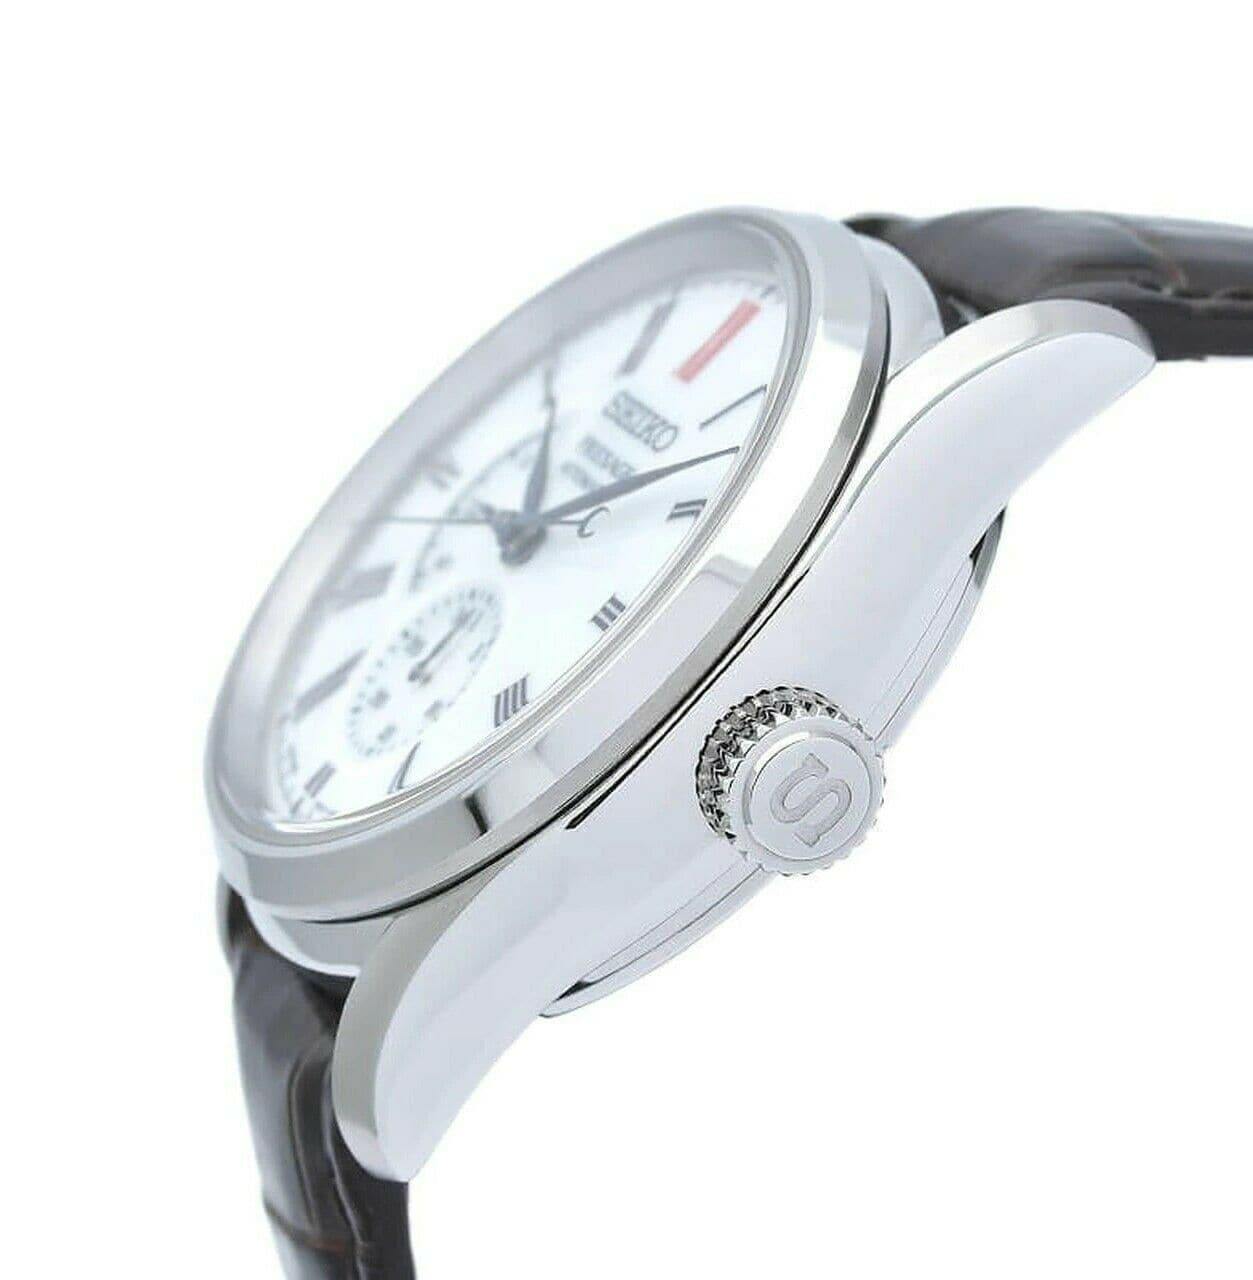 Seiko Presage Power Reserve Ind Arita Porcelain Dial White Men's Watch SPB093J1 - Prestige